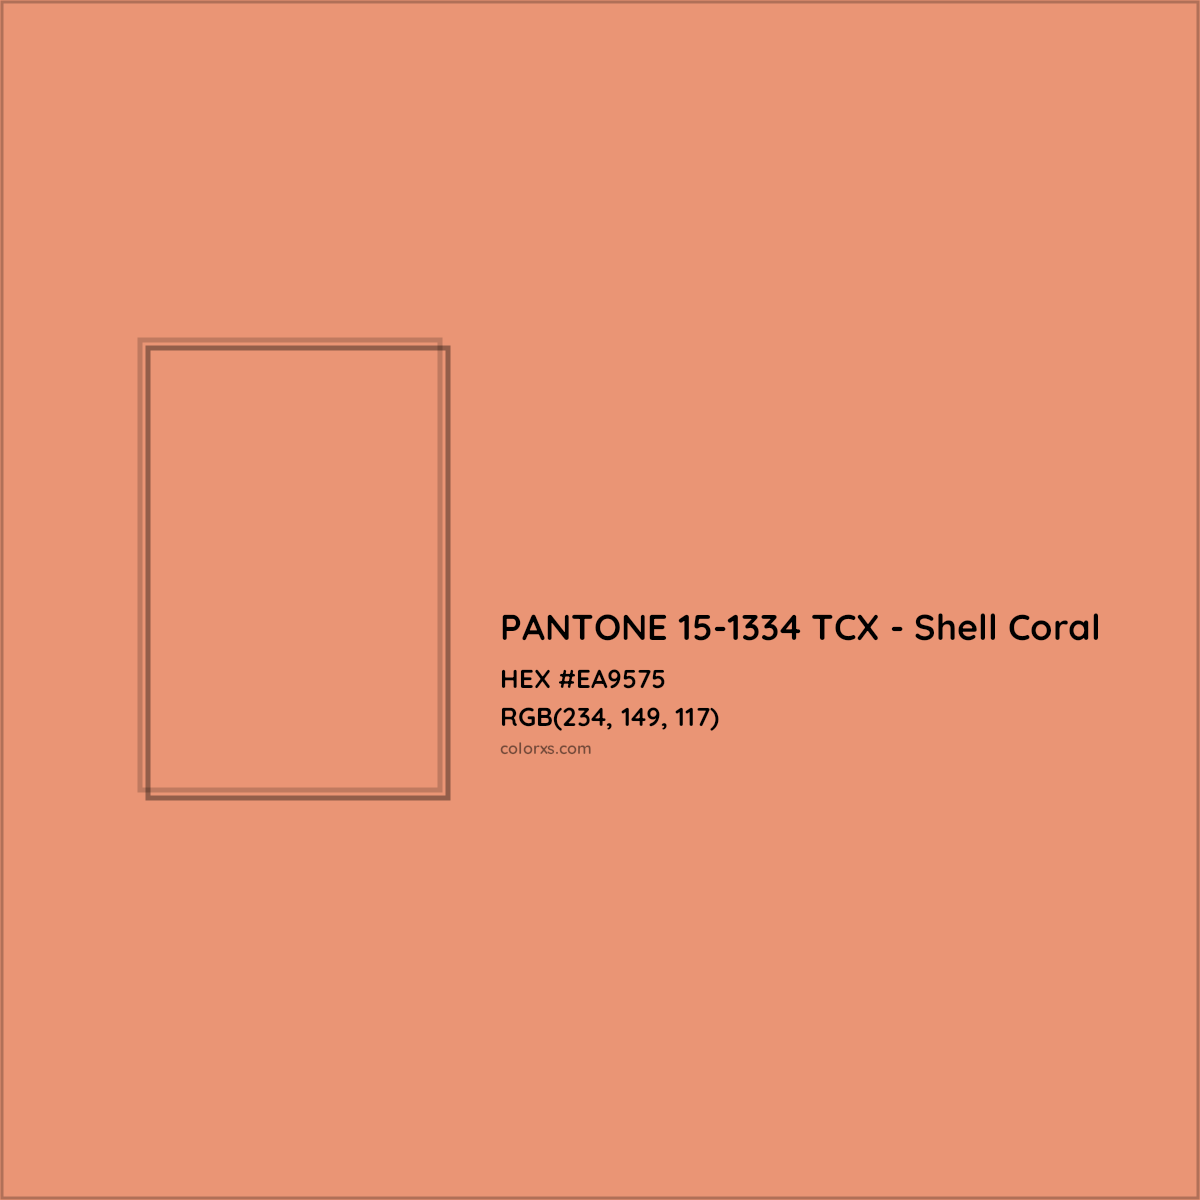 HEX #EA9575 PANTONE 15-1334 TCX - Shell Coral CMS Pantone TCX - Color Code